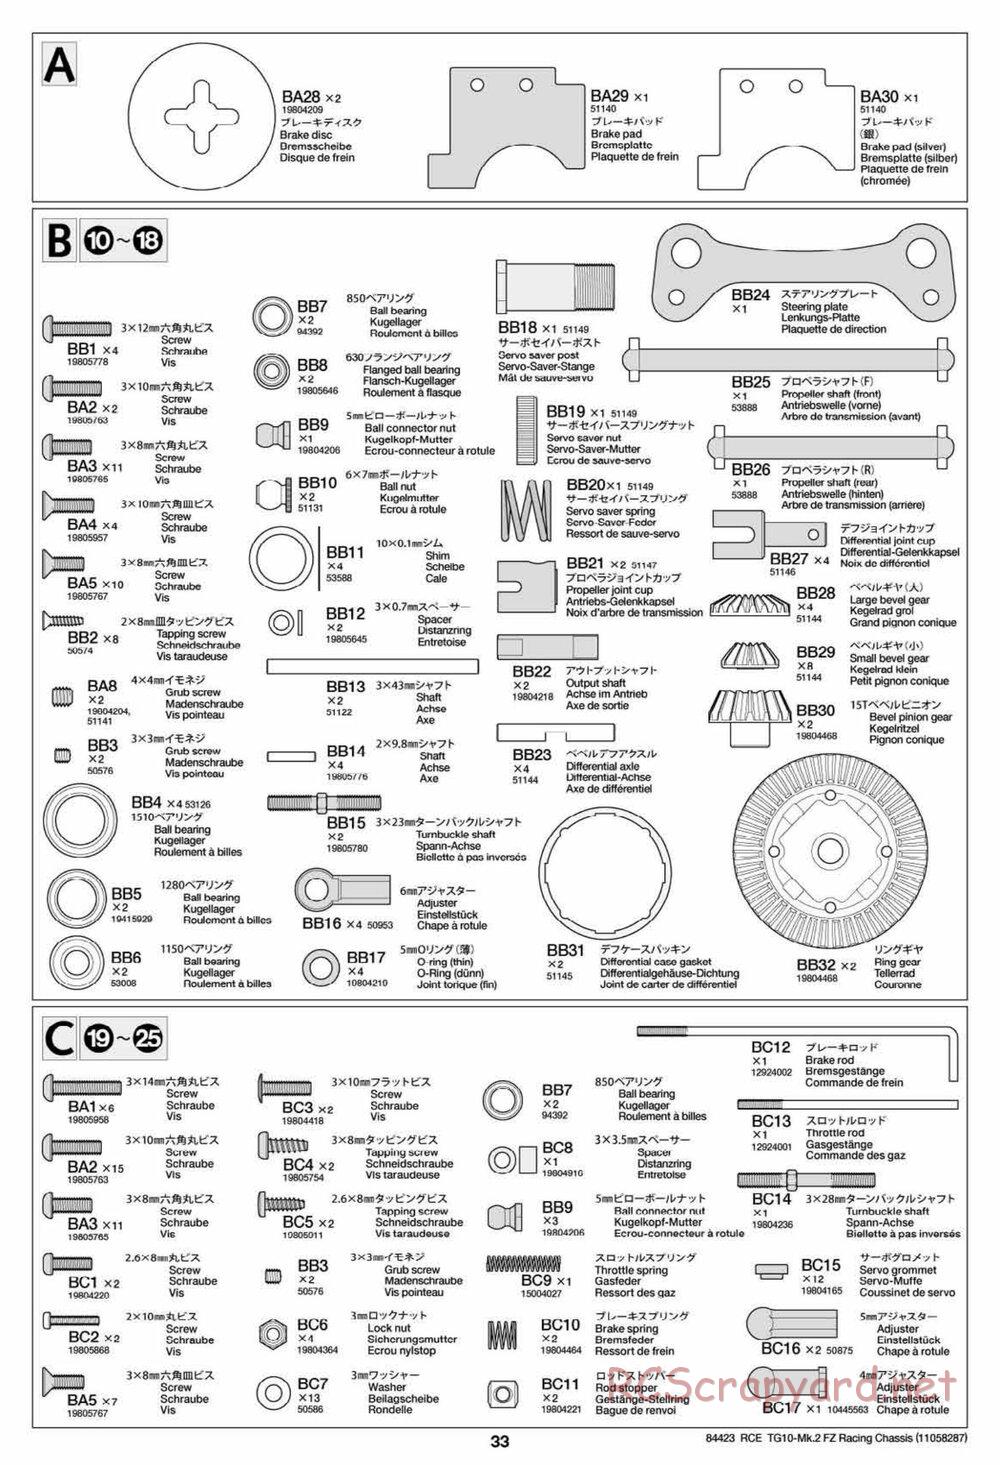 Tamiya - TG10 Mk.2 FZ Racing Chassis - Manual - Page 33